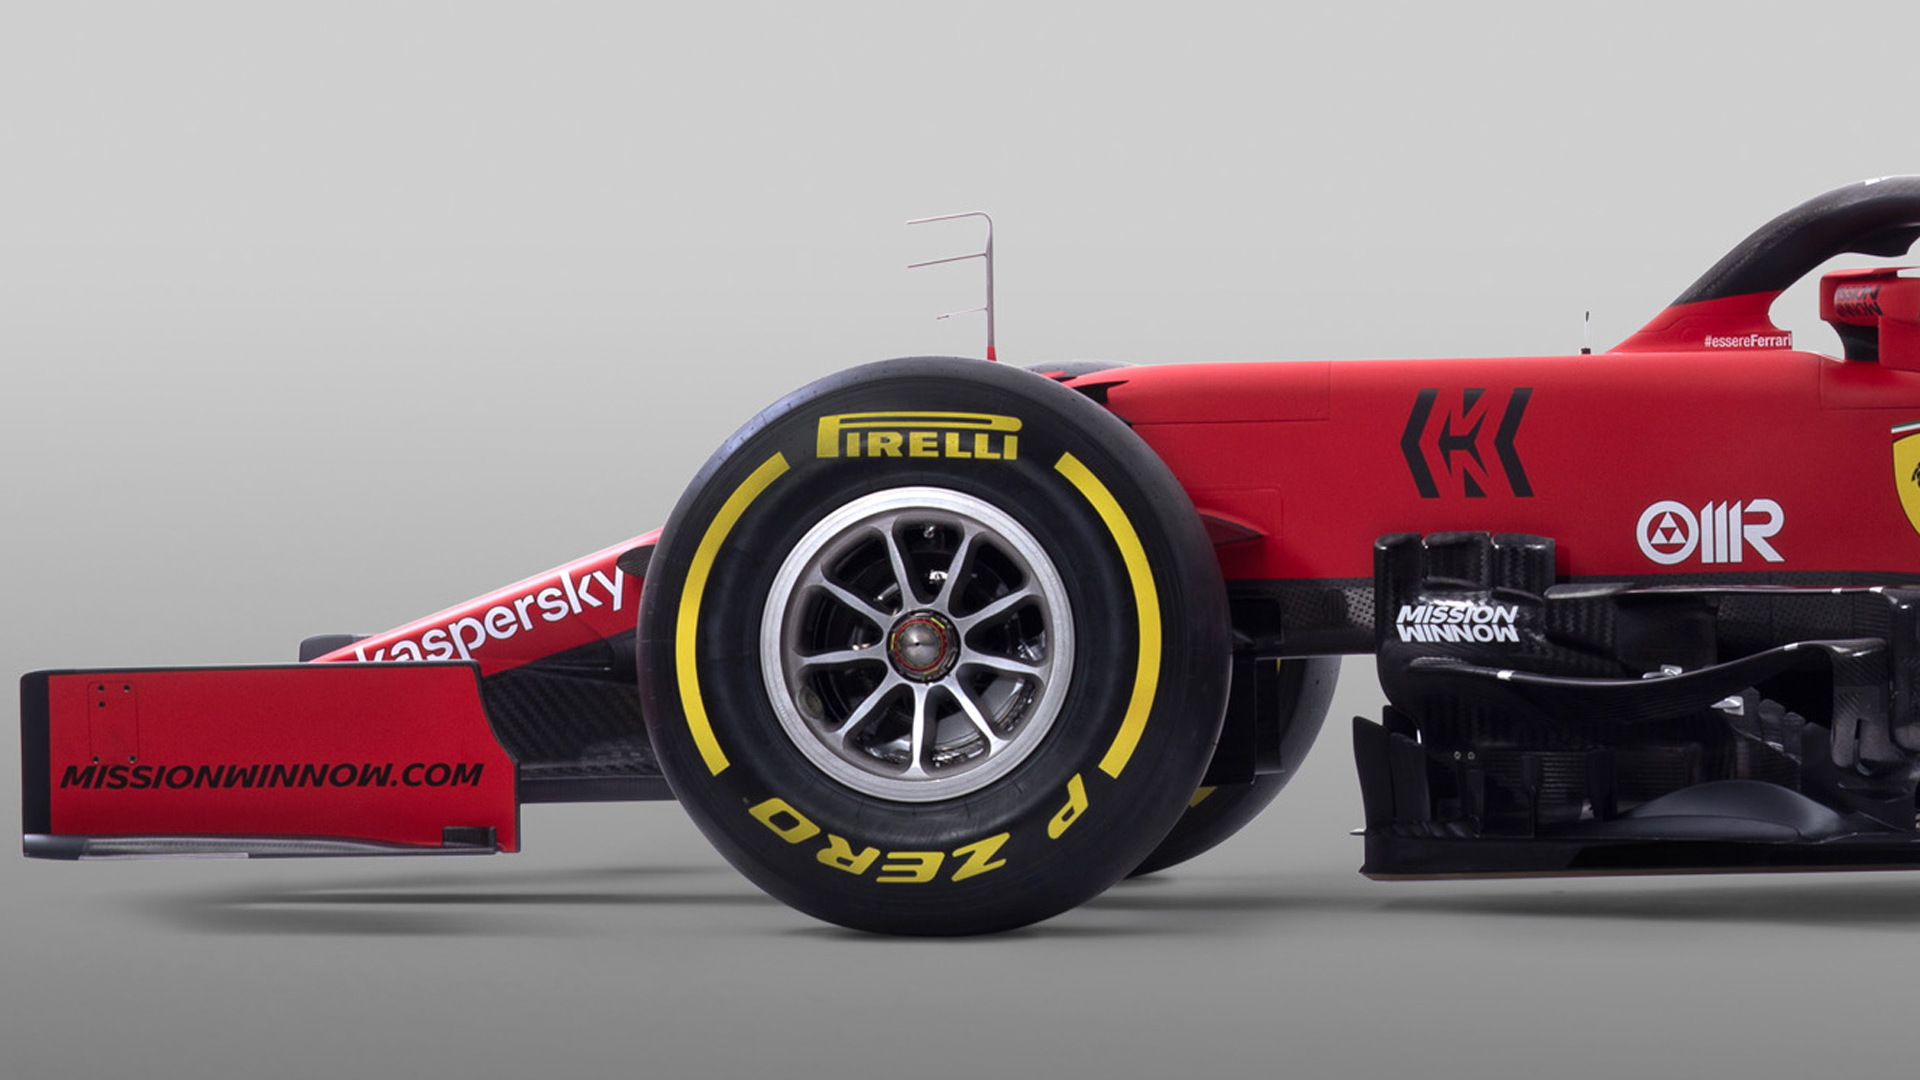 2021 Ferrari SF21 Formula One race car